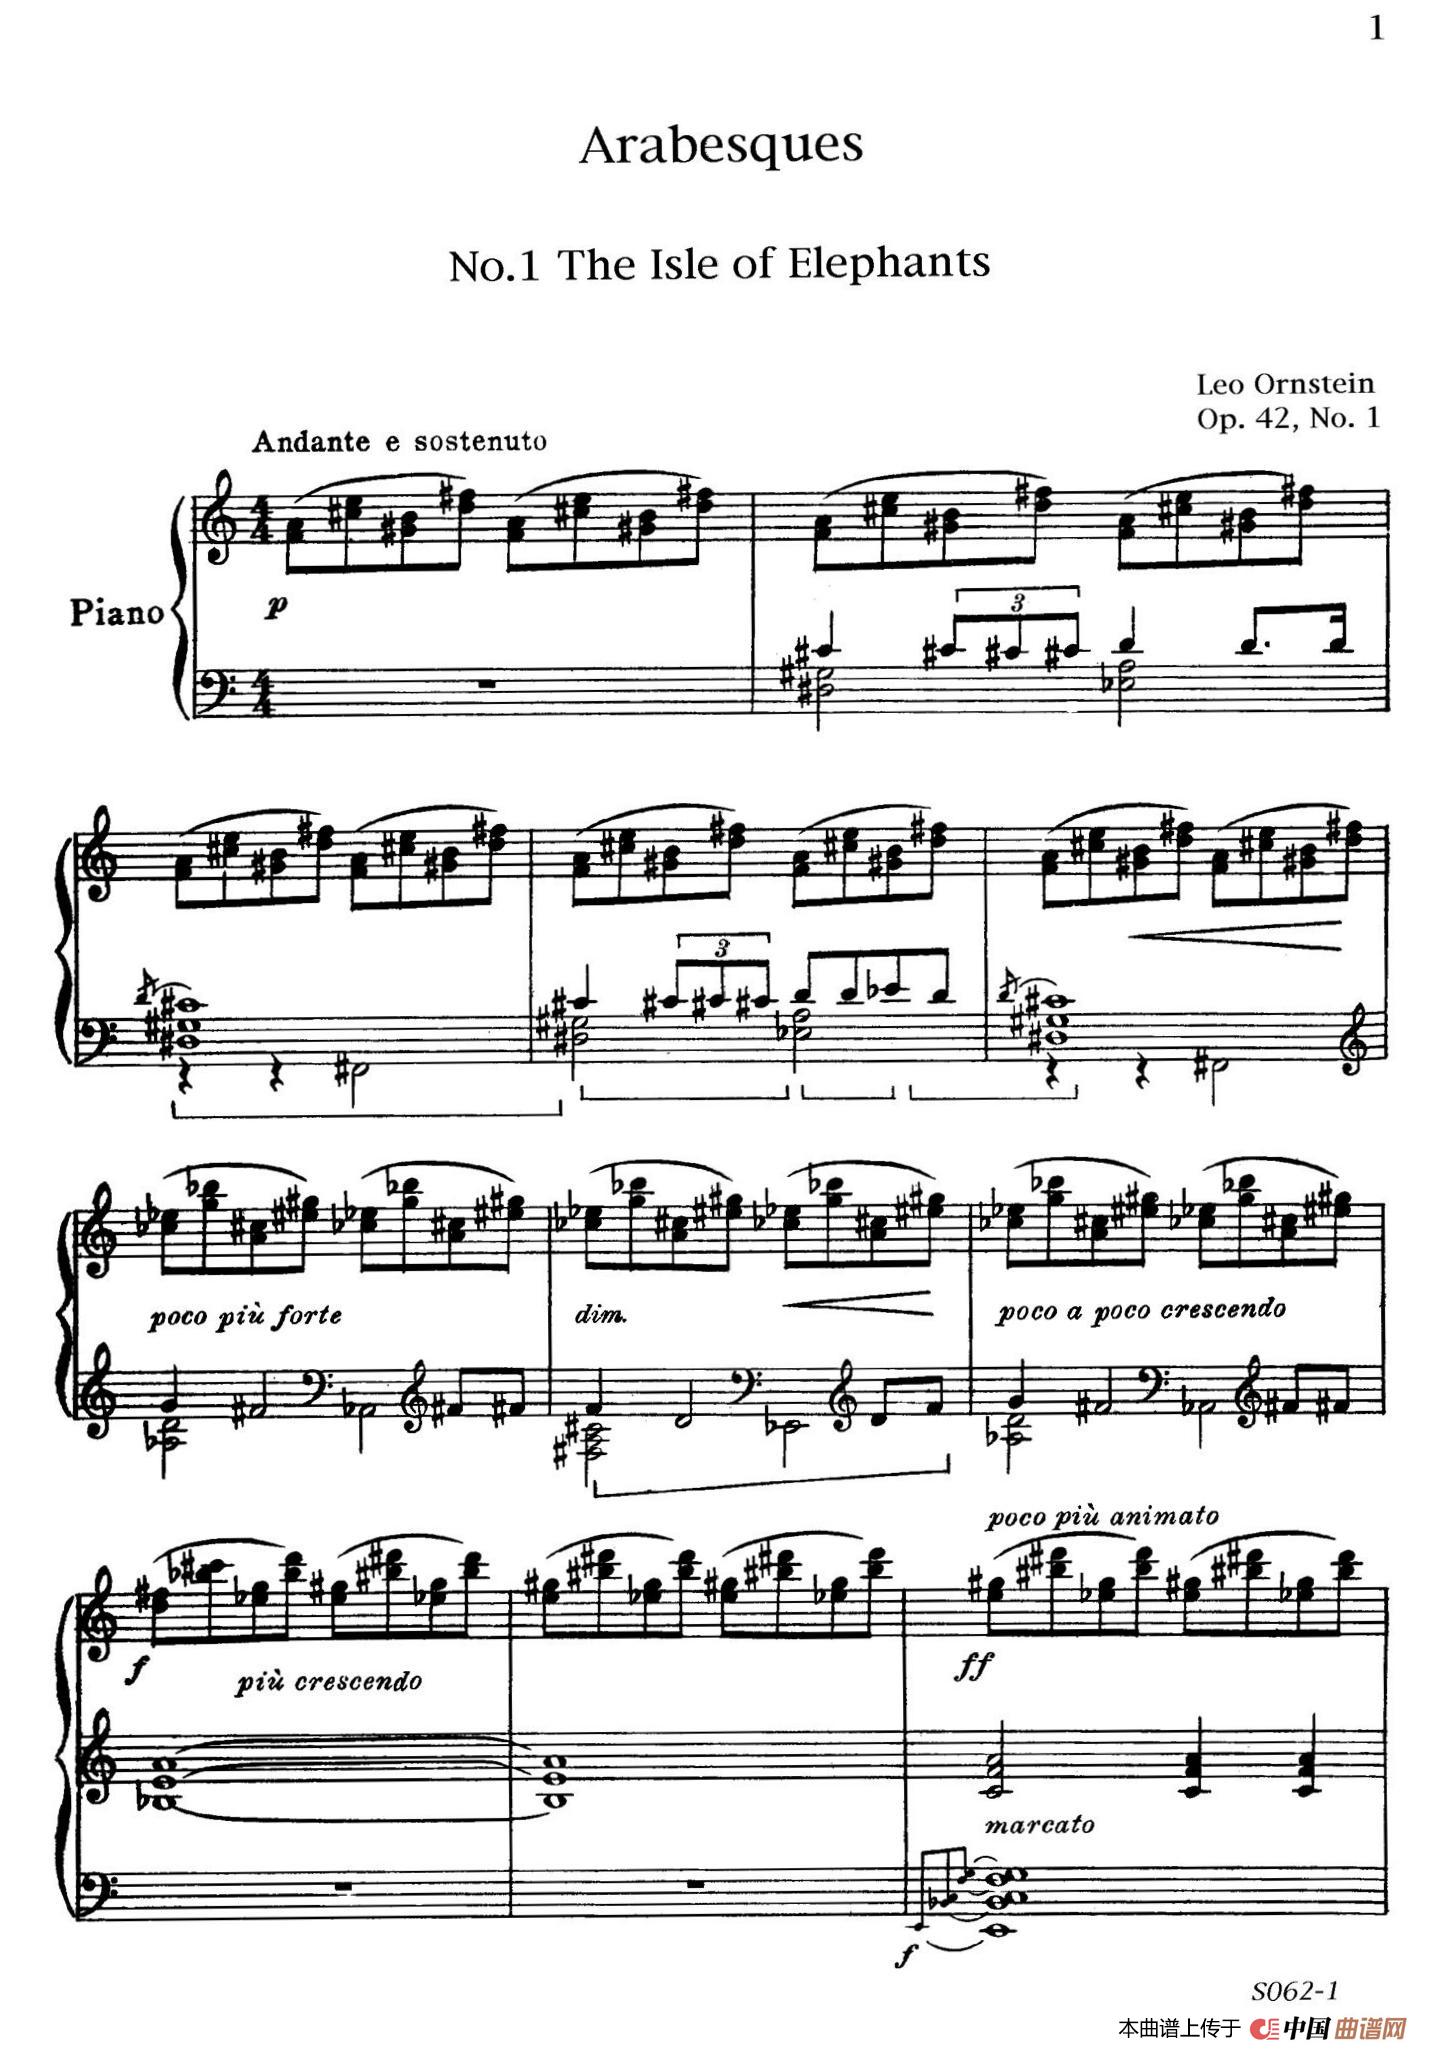 《Arabesques Op.42》钢琴曲谱图分享